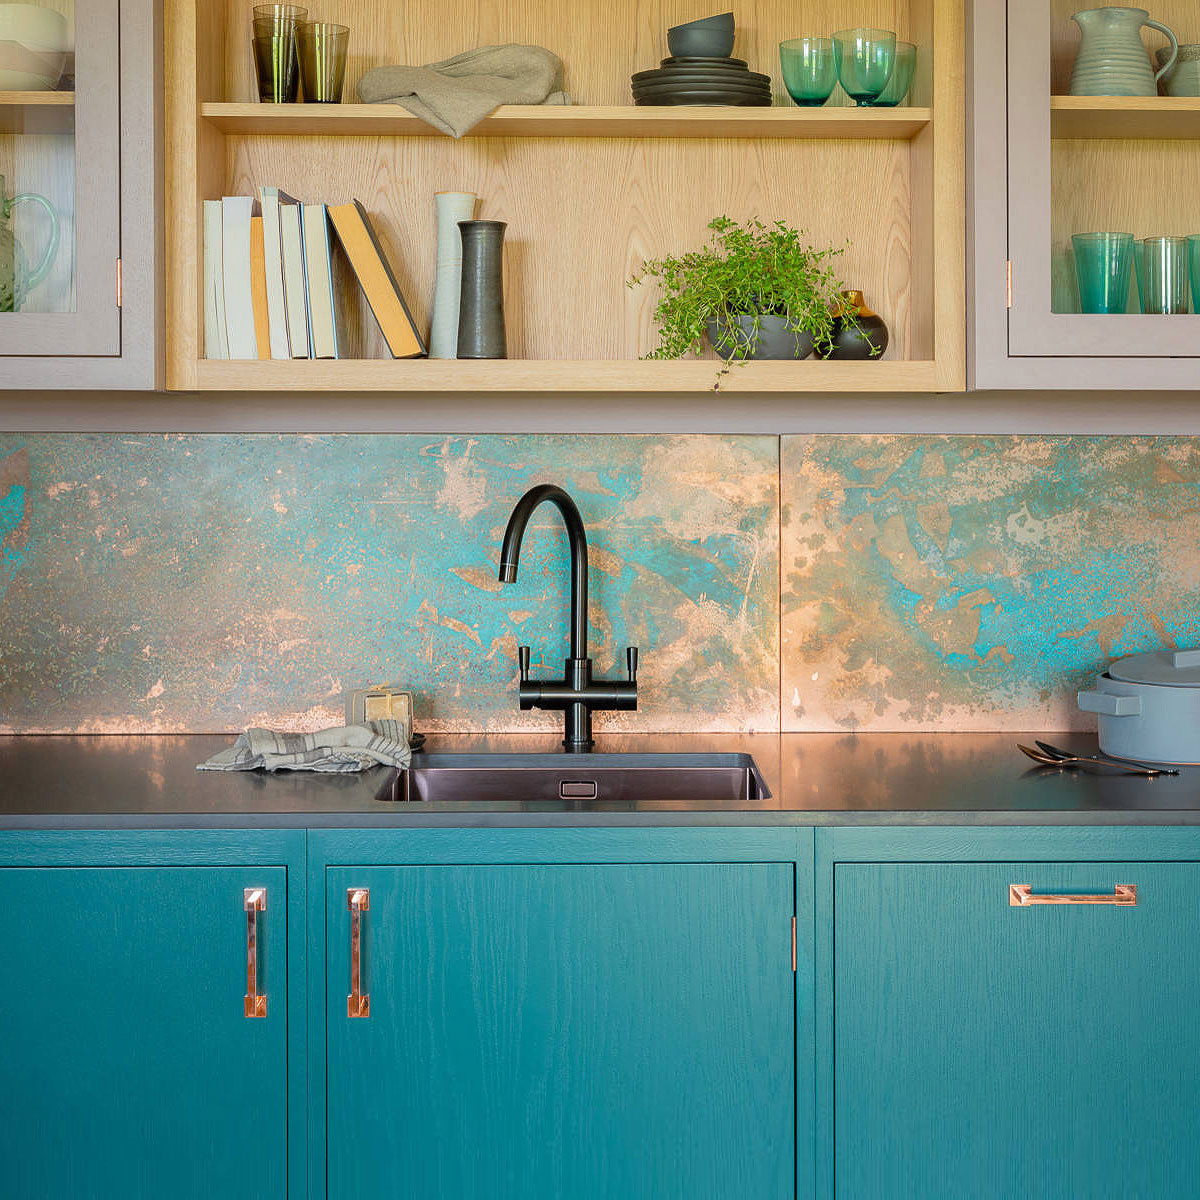 Blue Kitchen Tile Backsplash
 113 Blue Backsplash Ideas Beach Style Layouts Tips